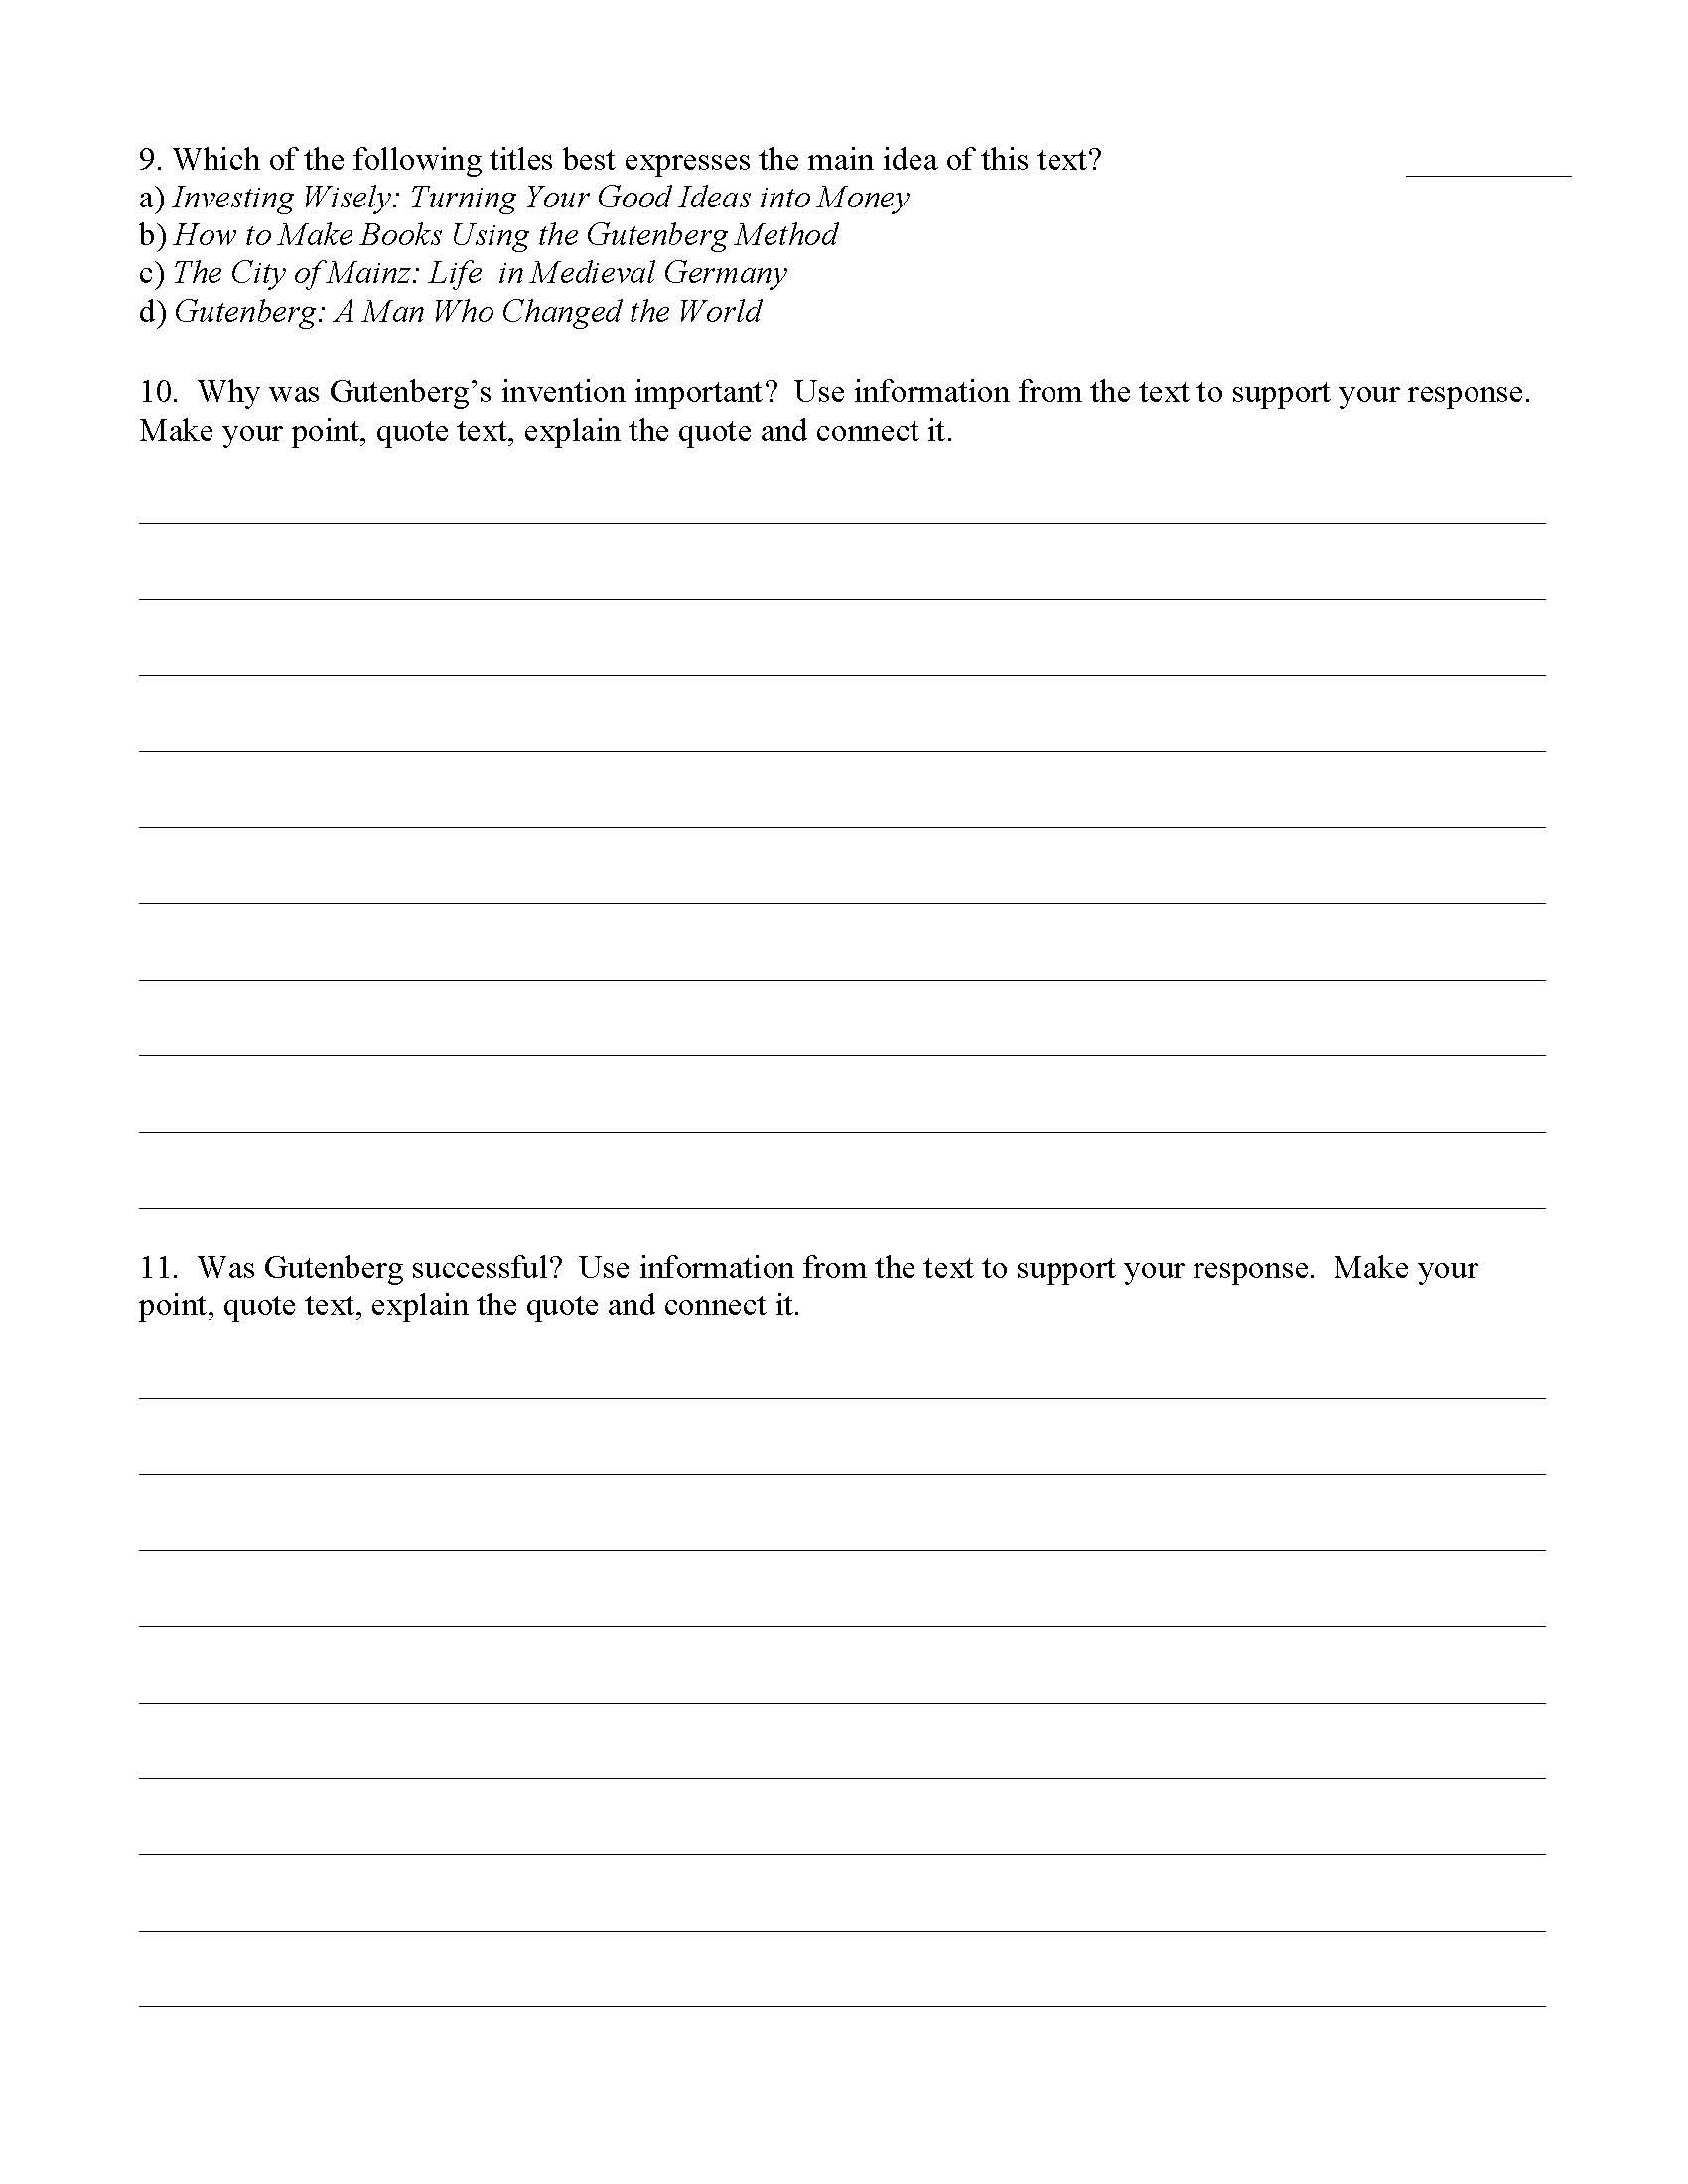 Summary Worksheets 5th Grade Summary Test 1